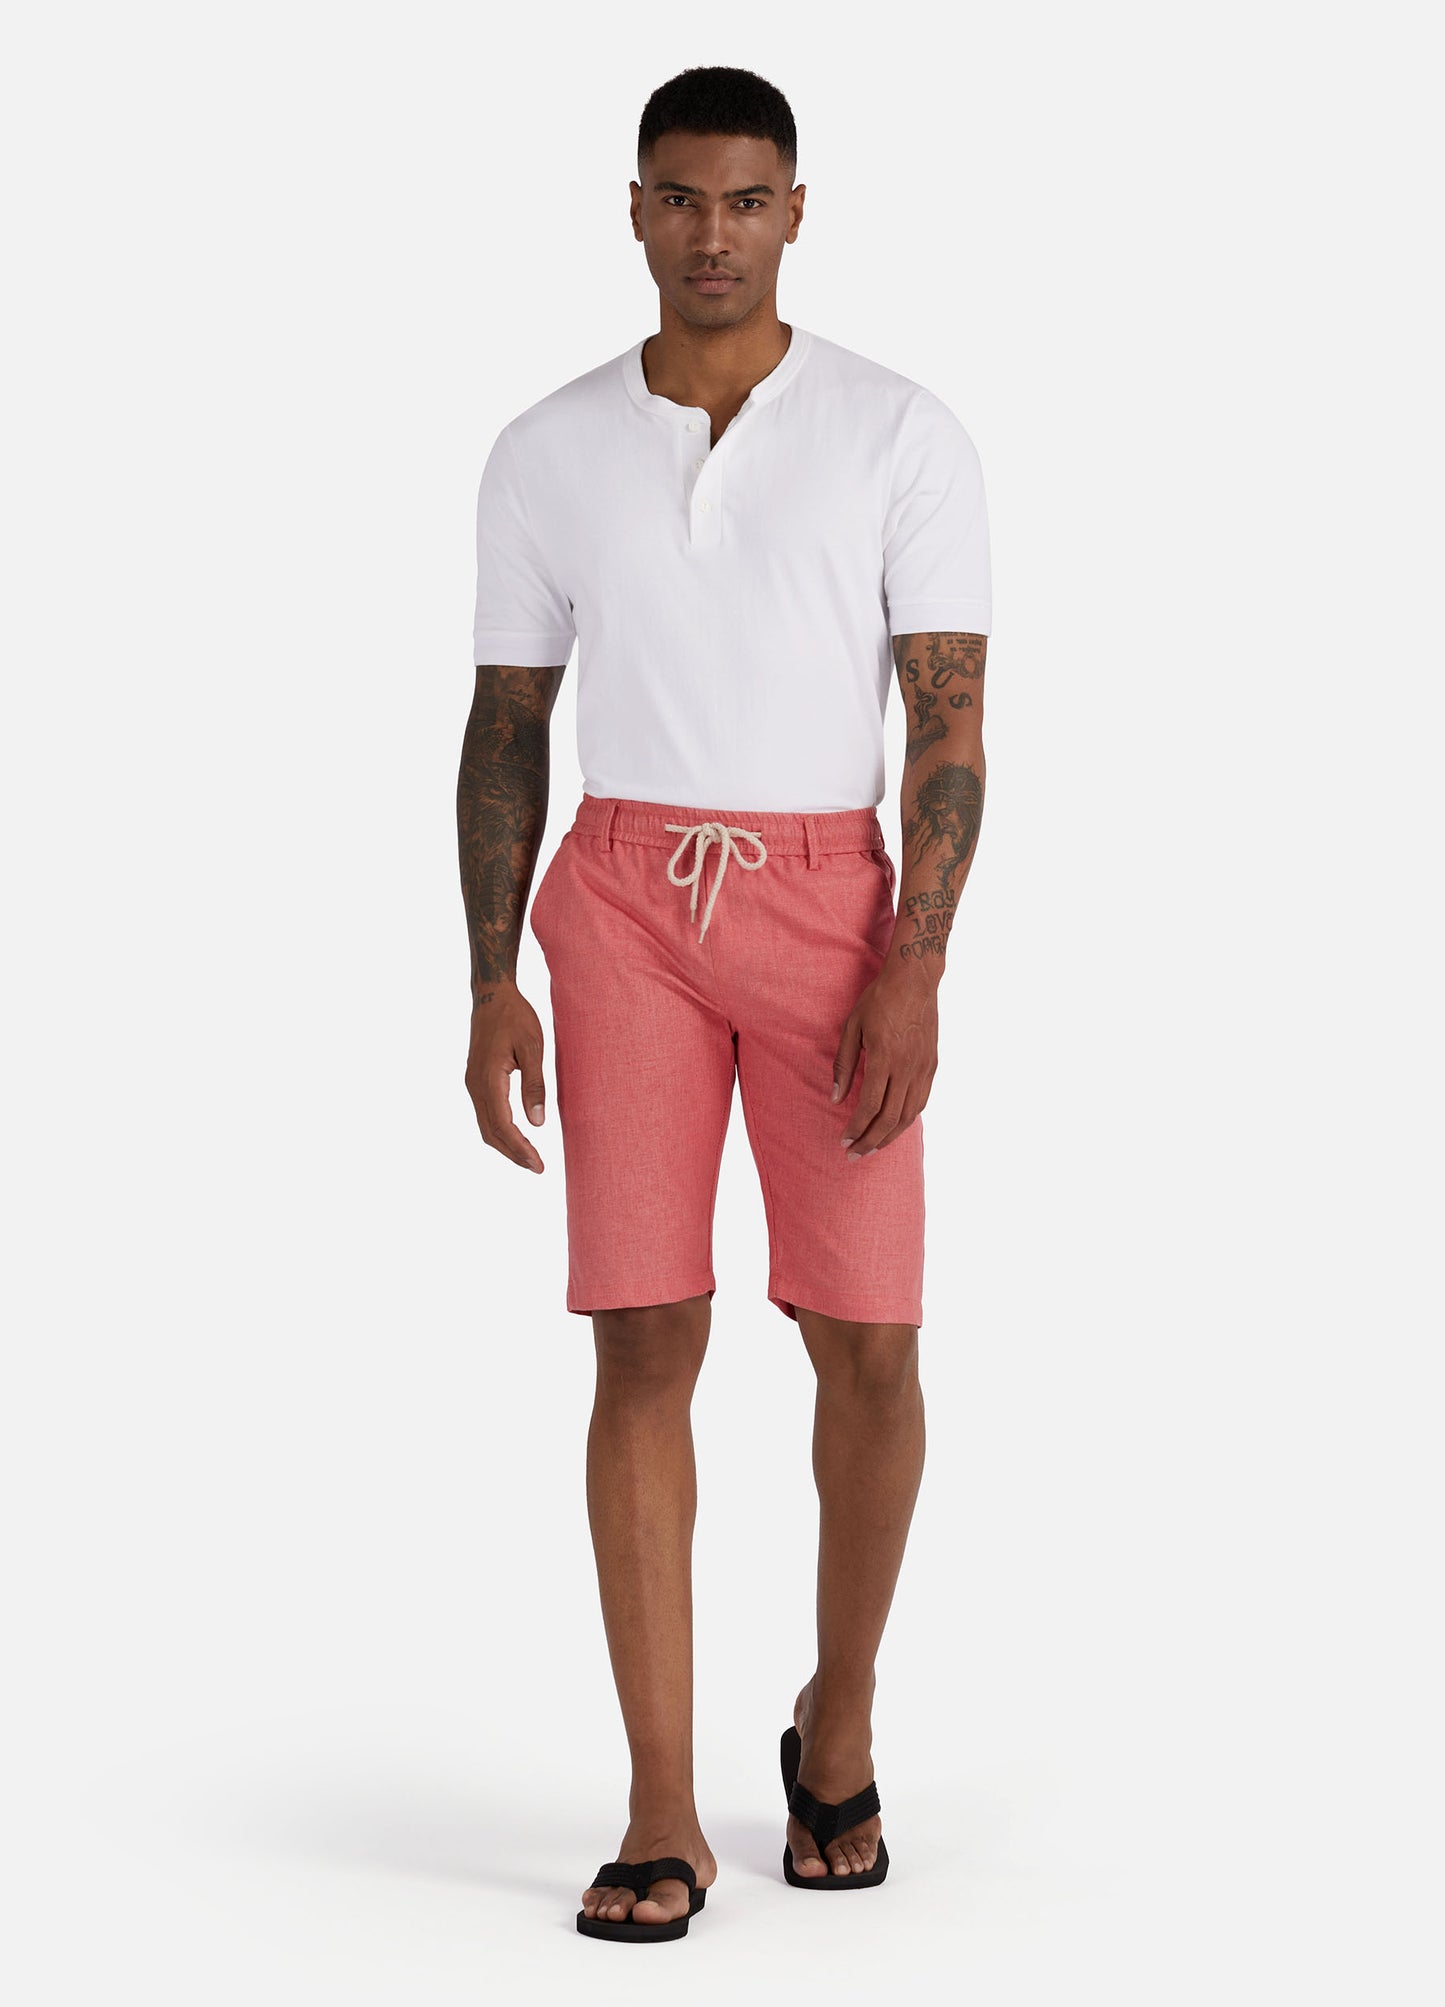 1PA1 Men's Cotton Linen Drawstring Shorts Elastic Waist Summer Beach Shorts